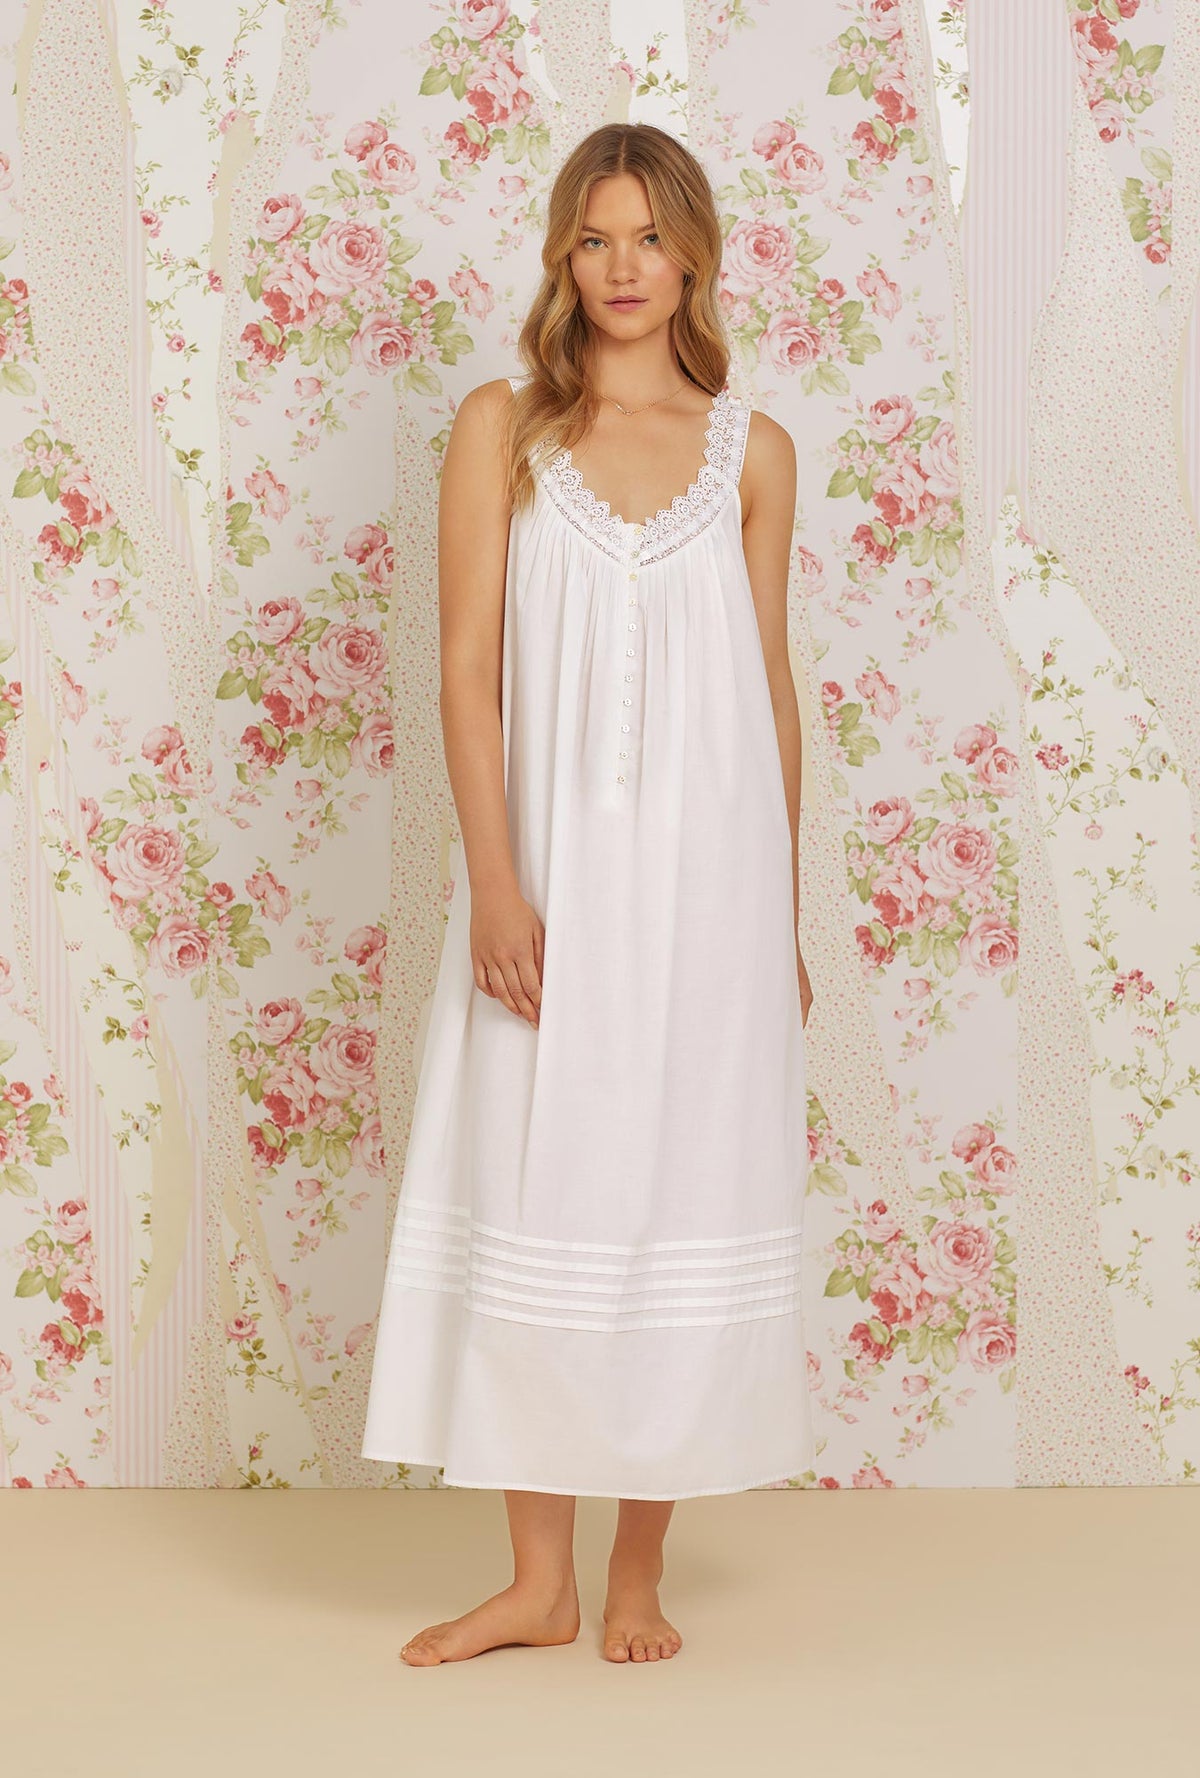 A lady wearing white sleeveless elizabeth cotton woven nightgown.